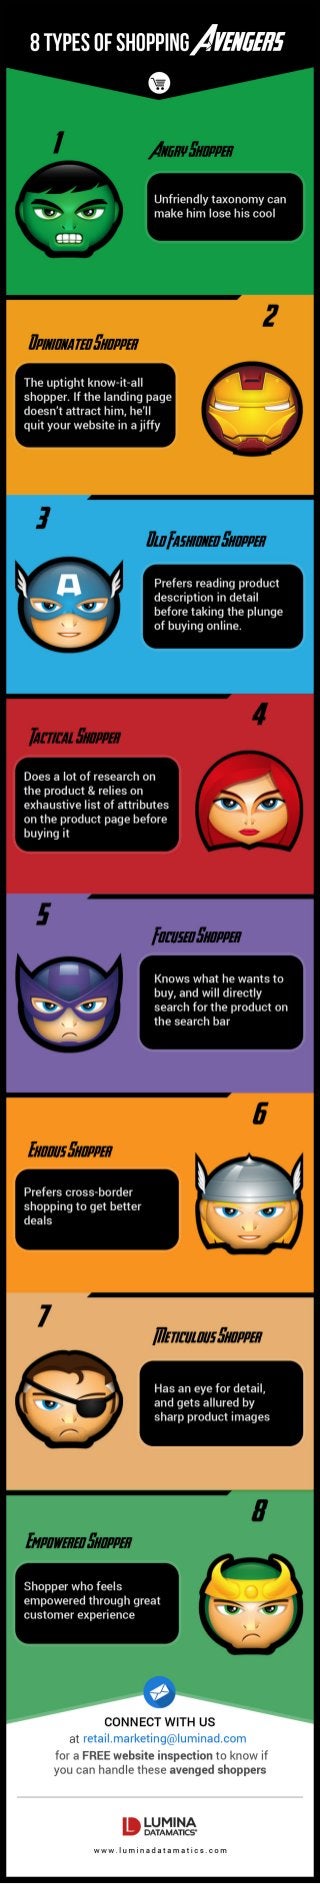 8 Types of Shopping Avengers